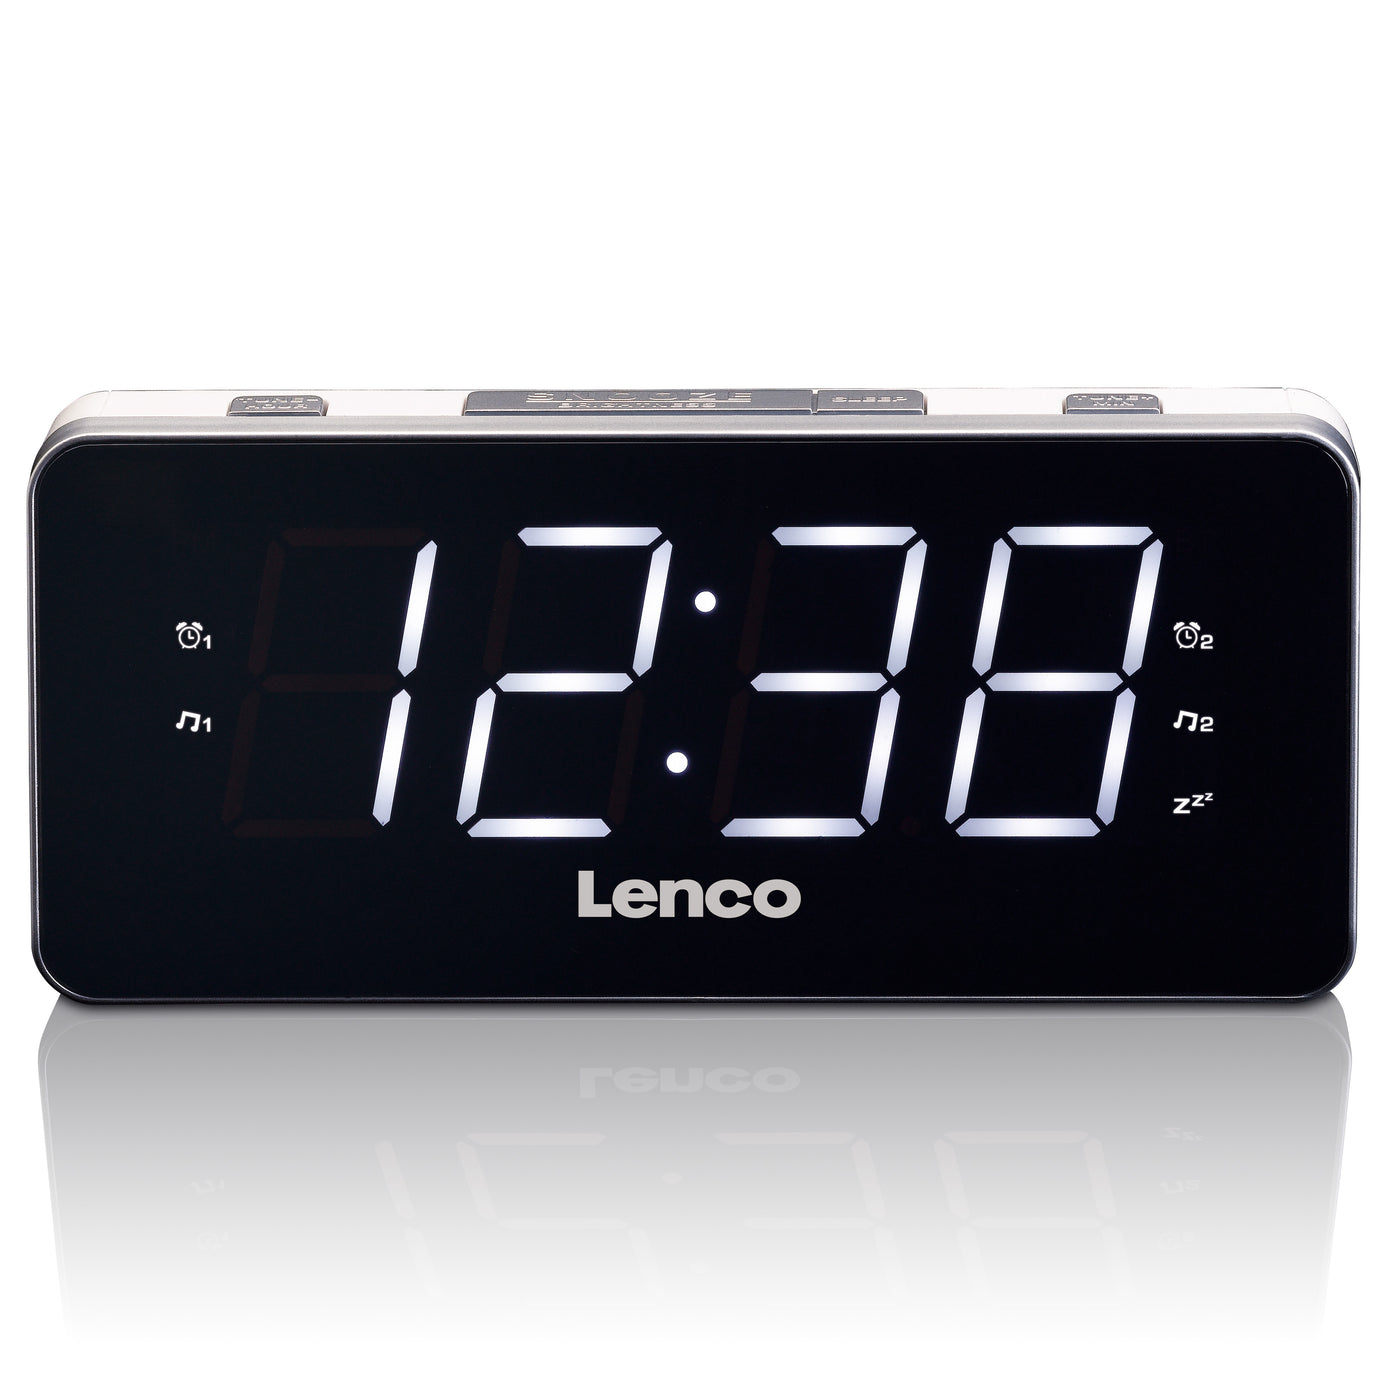 LENCO CR-18 White - PLL FM Alarm Clock Radio large and clear 1.8" LED display - White